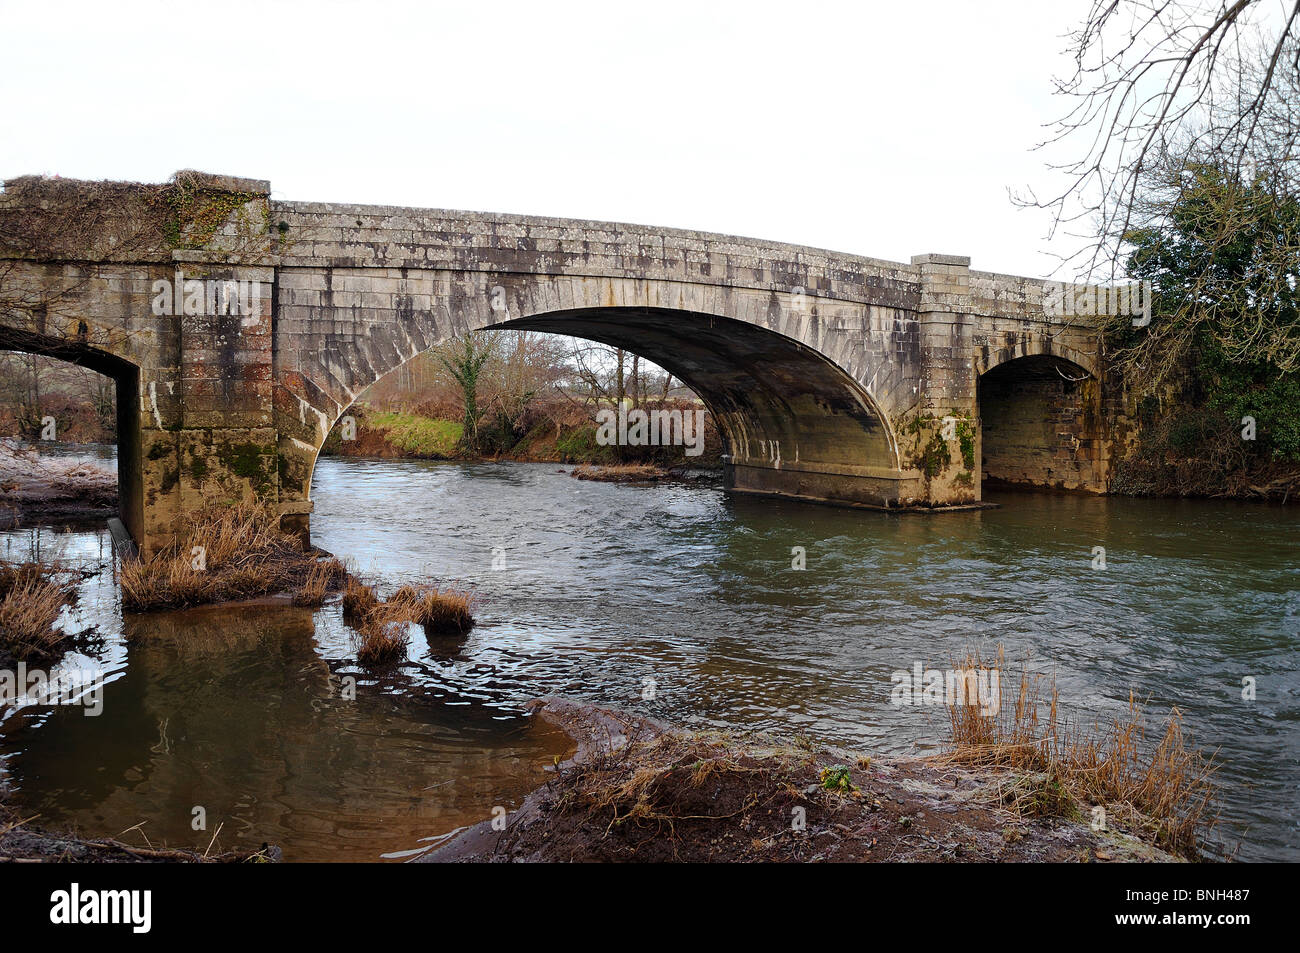 polson bridge spans the river tamar at launceston in cornwall, uk Stock Photo